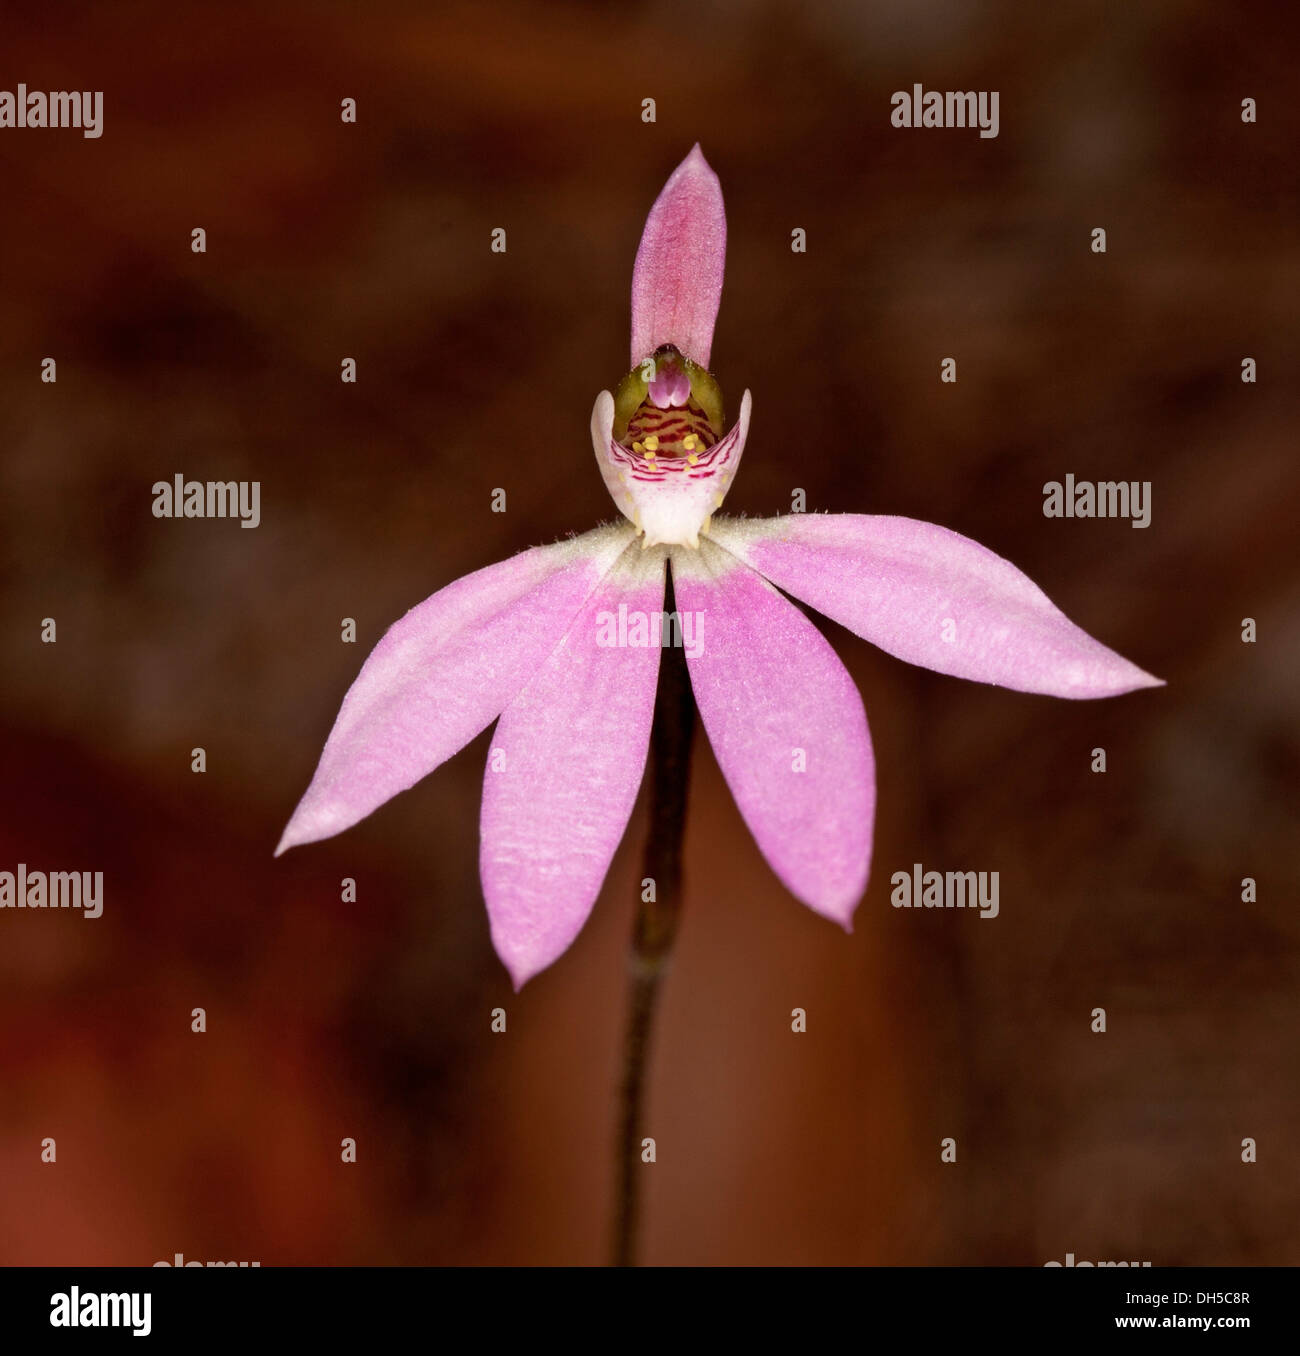 Attractive pink flower of Australian native ground orchid - Caladenia pusilla - against a dark background Stock Photo